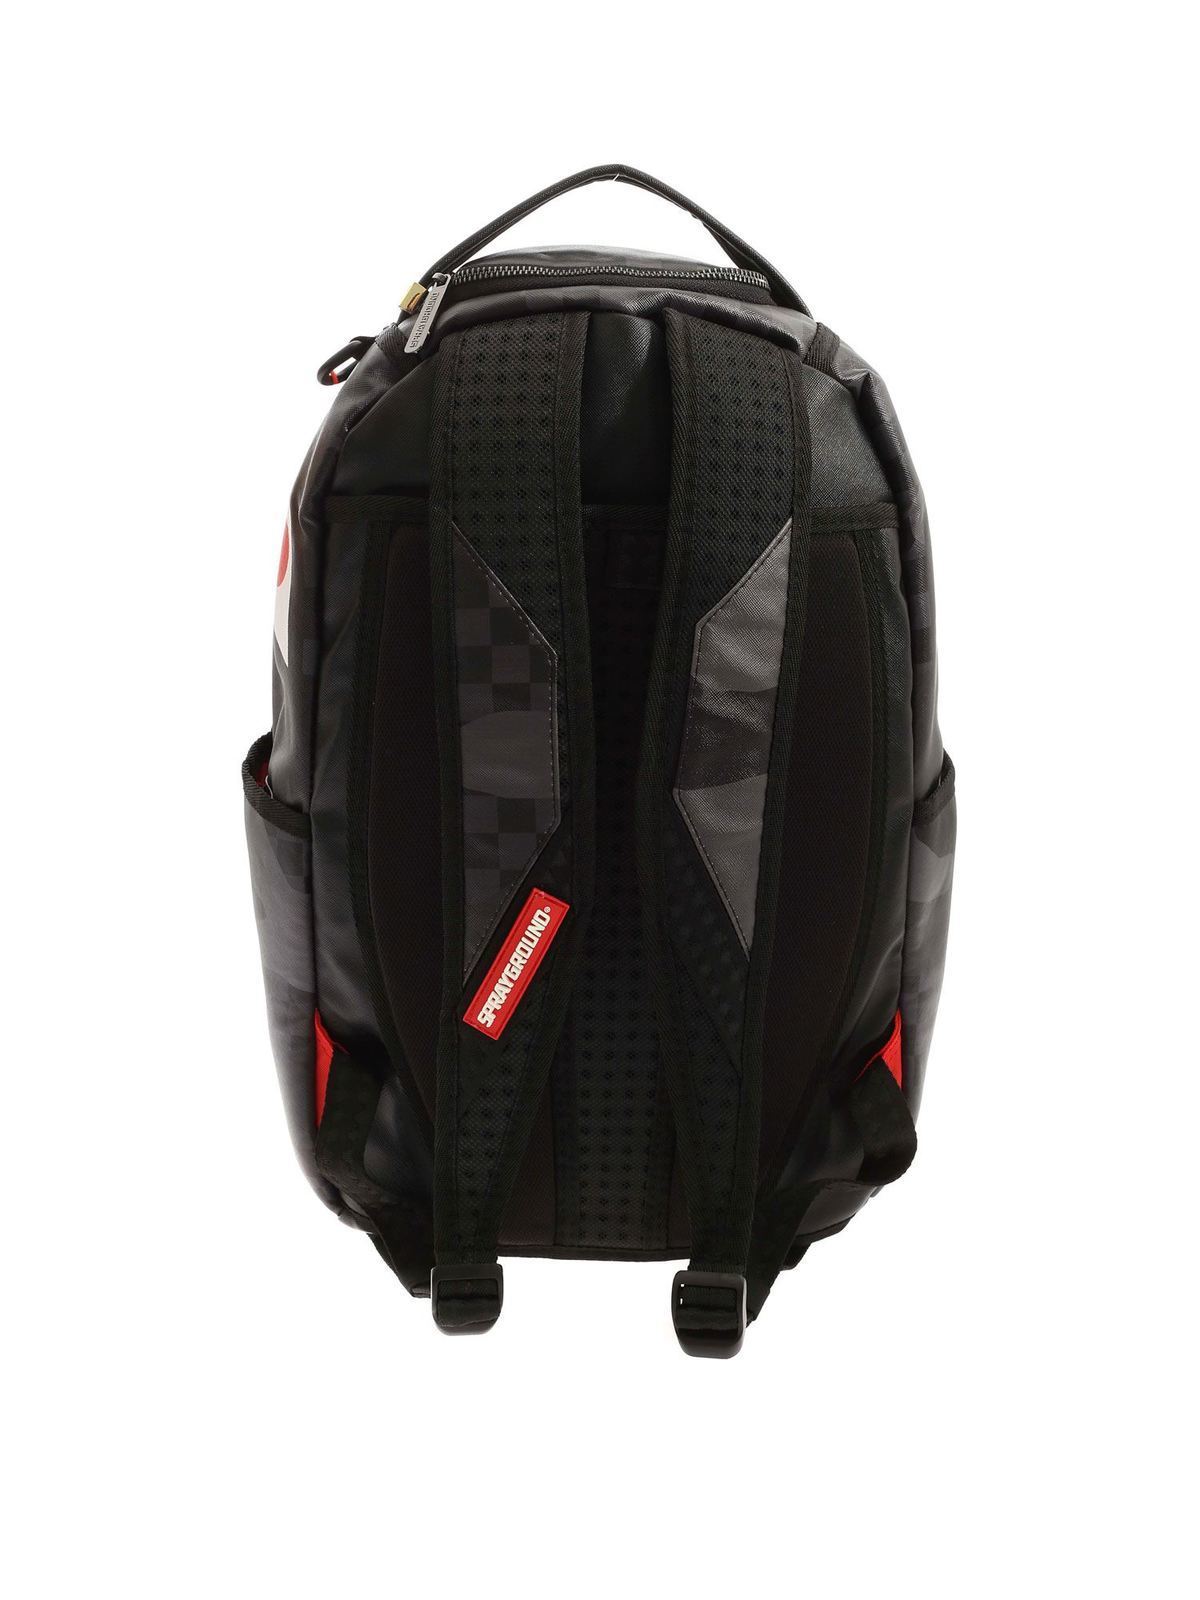 Sprayground Logo Core Black Backpack